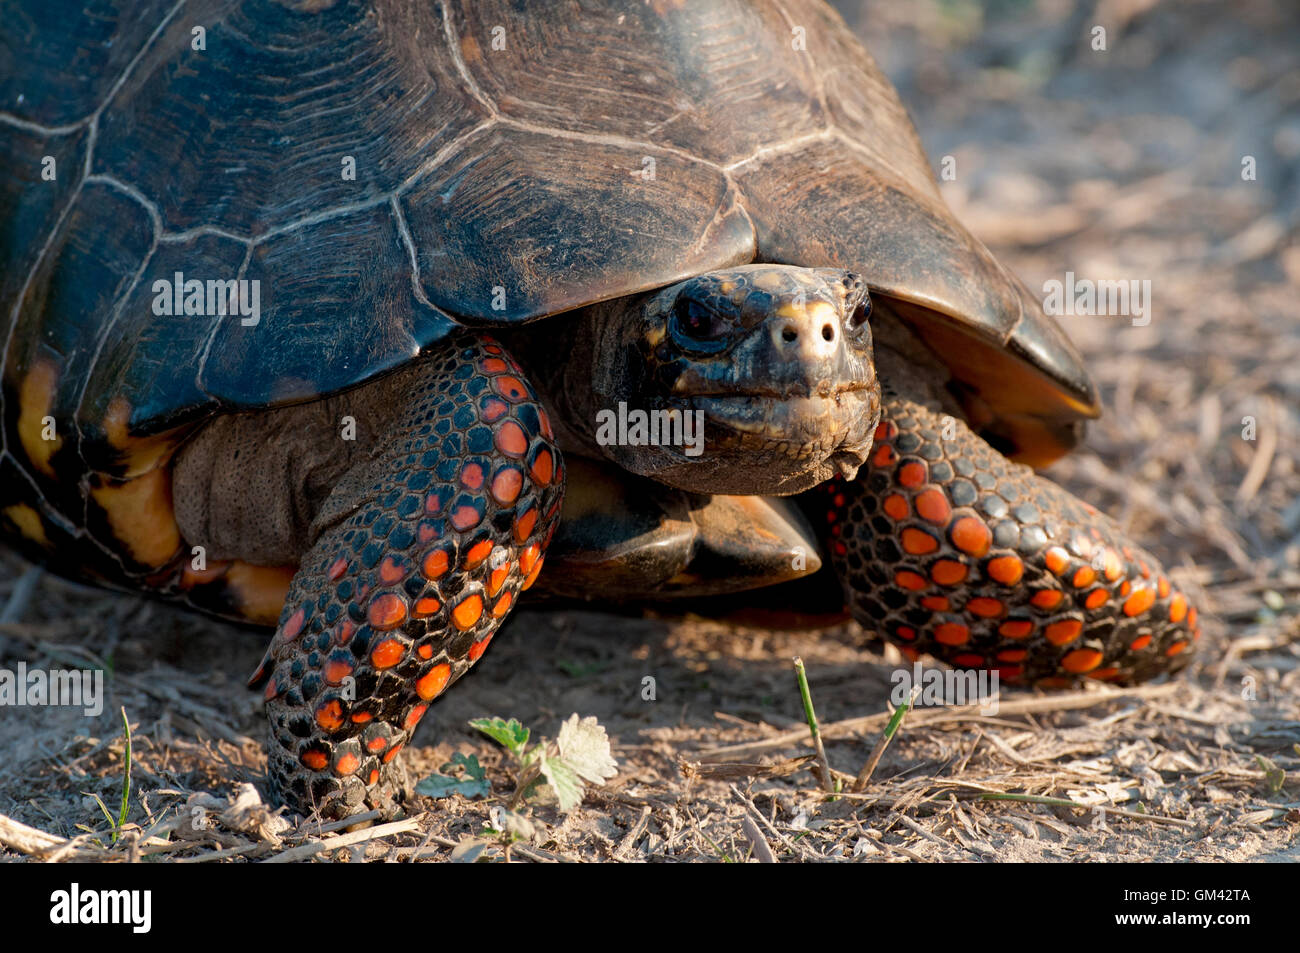 La tortuga de patas rojas (Chelonoidis carbonaria) en el Pantanal, en Brasil Foto de stock